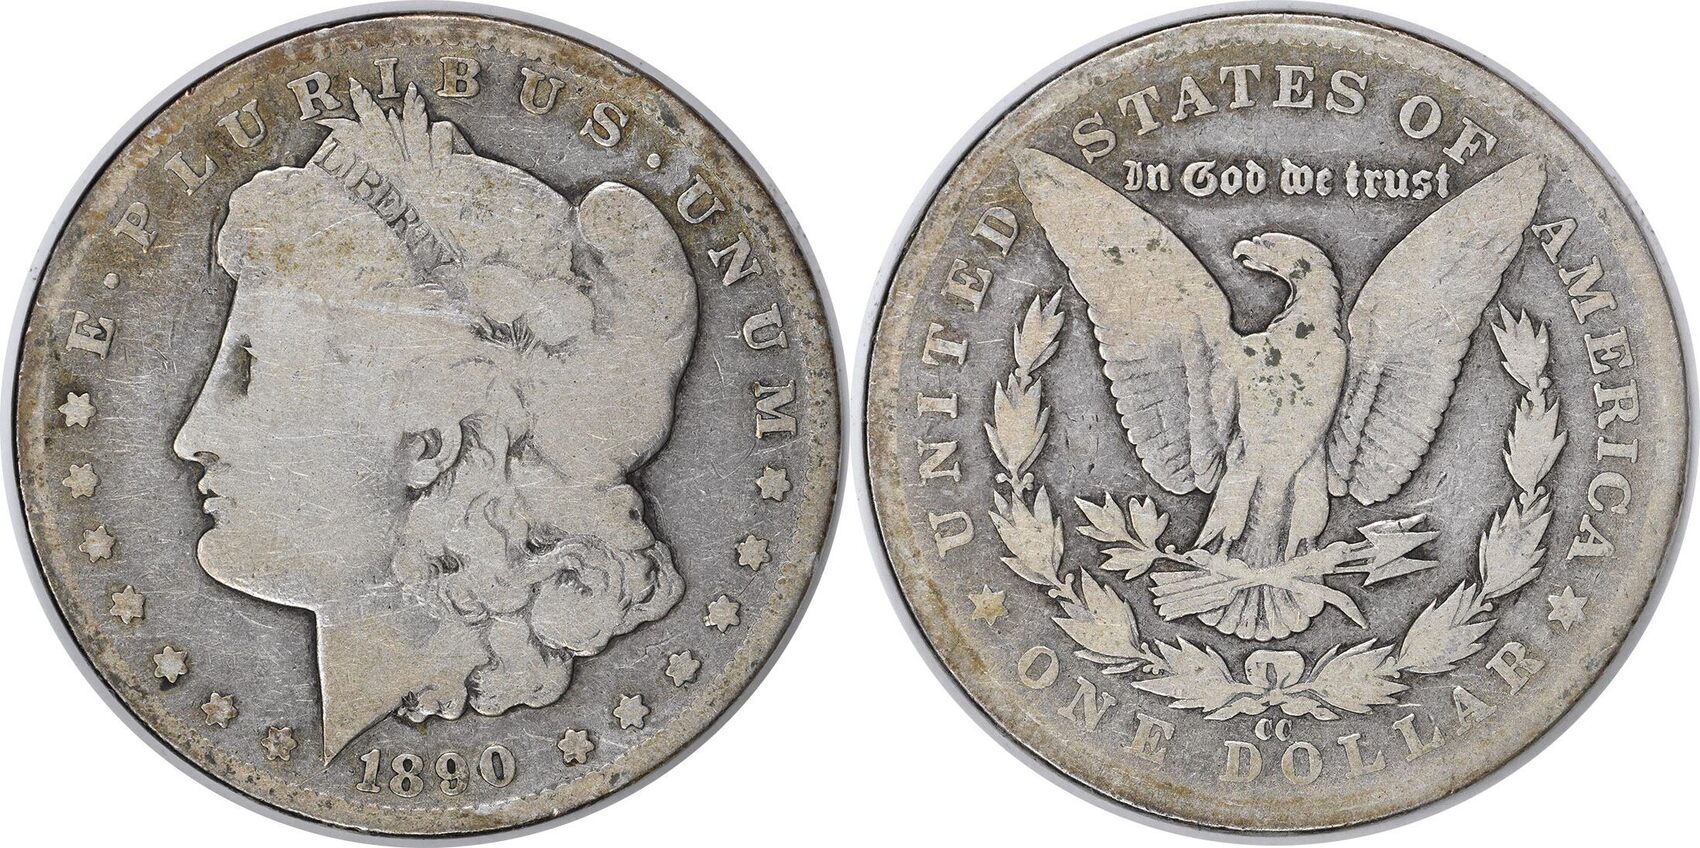 серебряный доллар сша